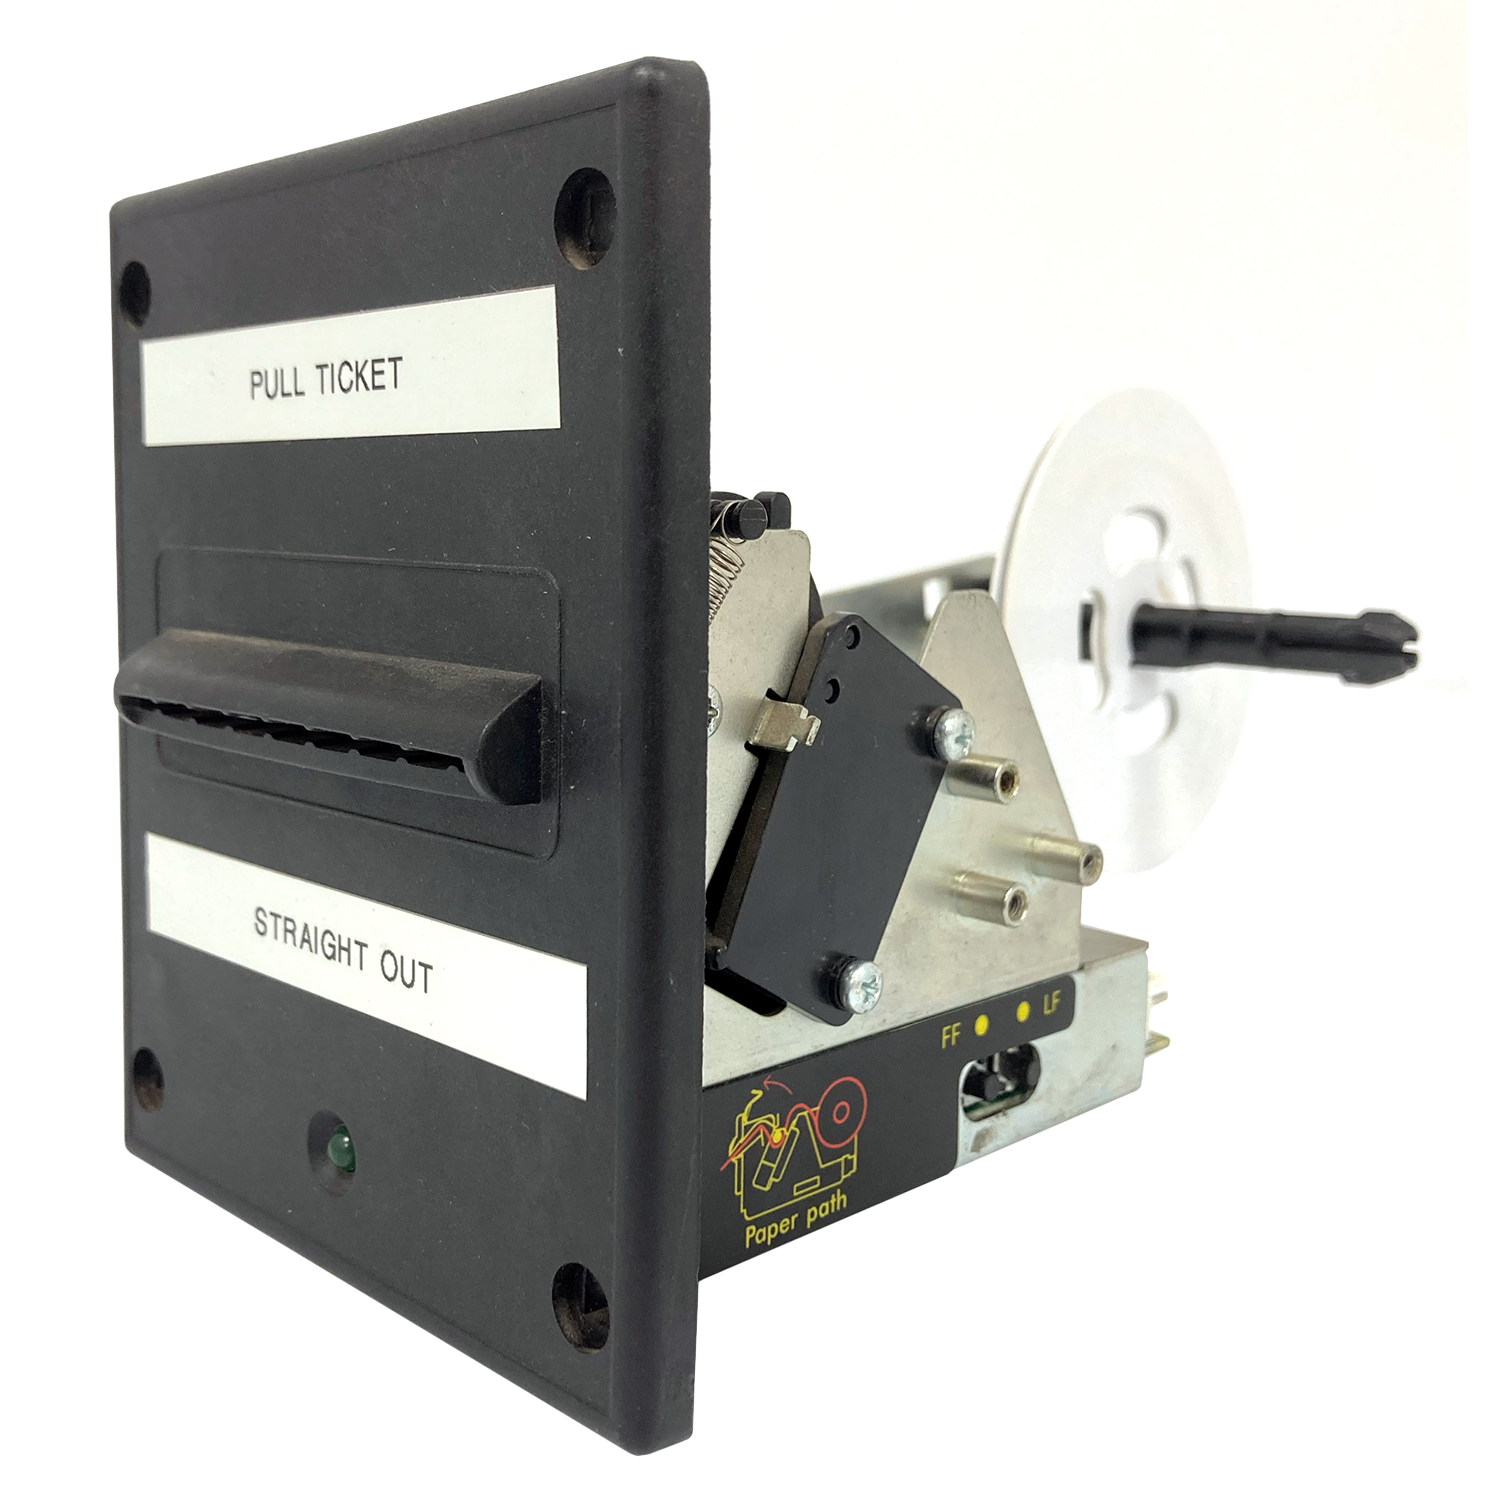 The used Custom TGO2h Printer is a pull-to-tear ticket printer that utilized custom POS emulation.